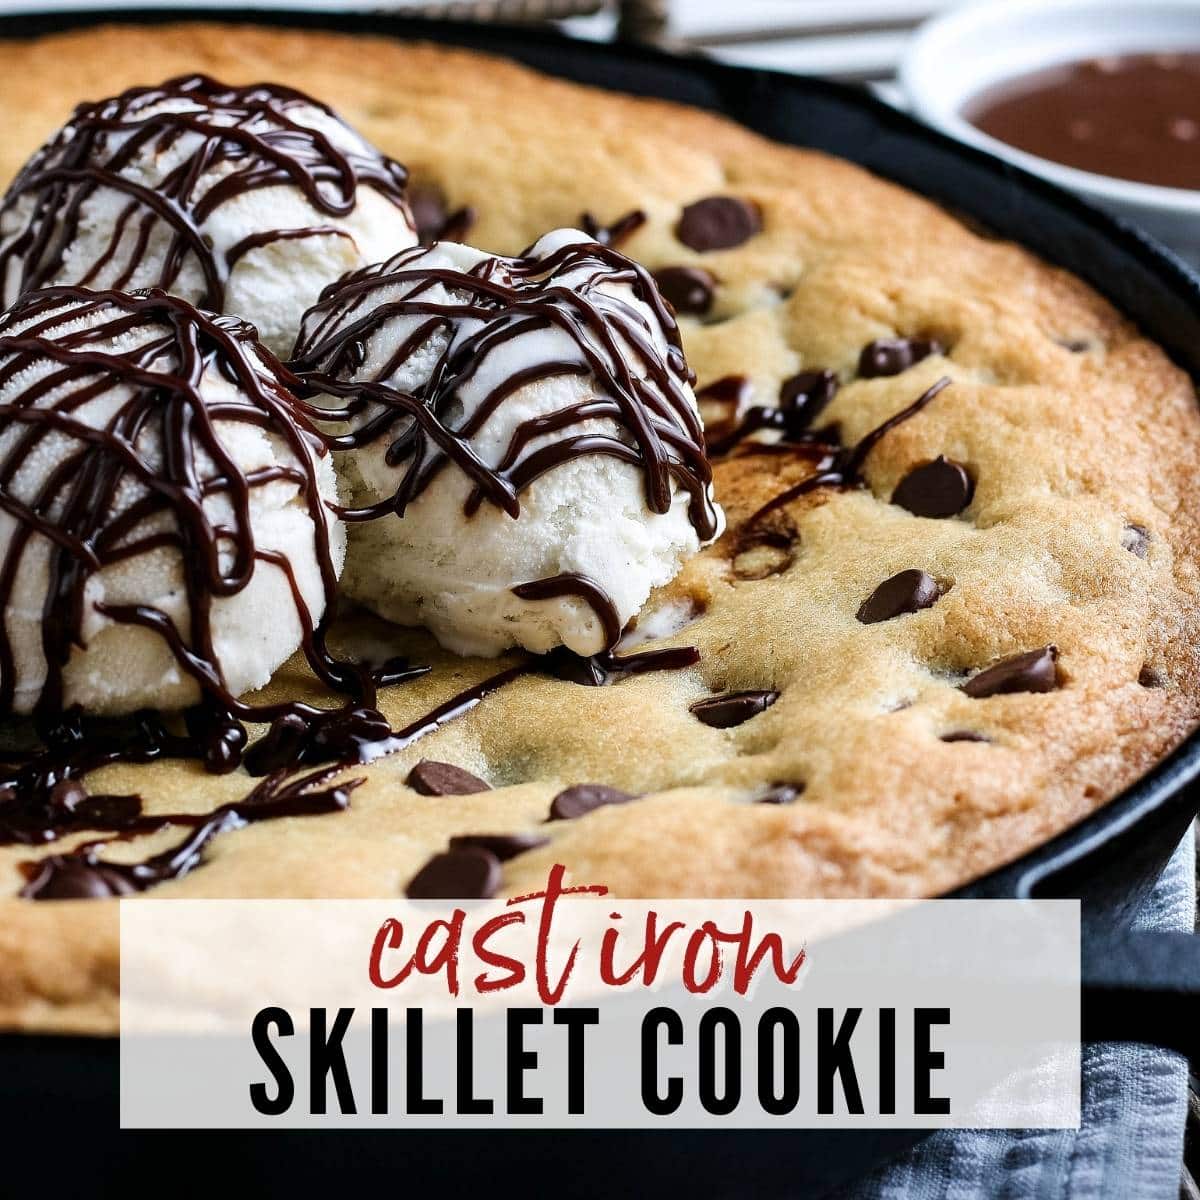 Cast Iron Skillet Cookie Baking Kit